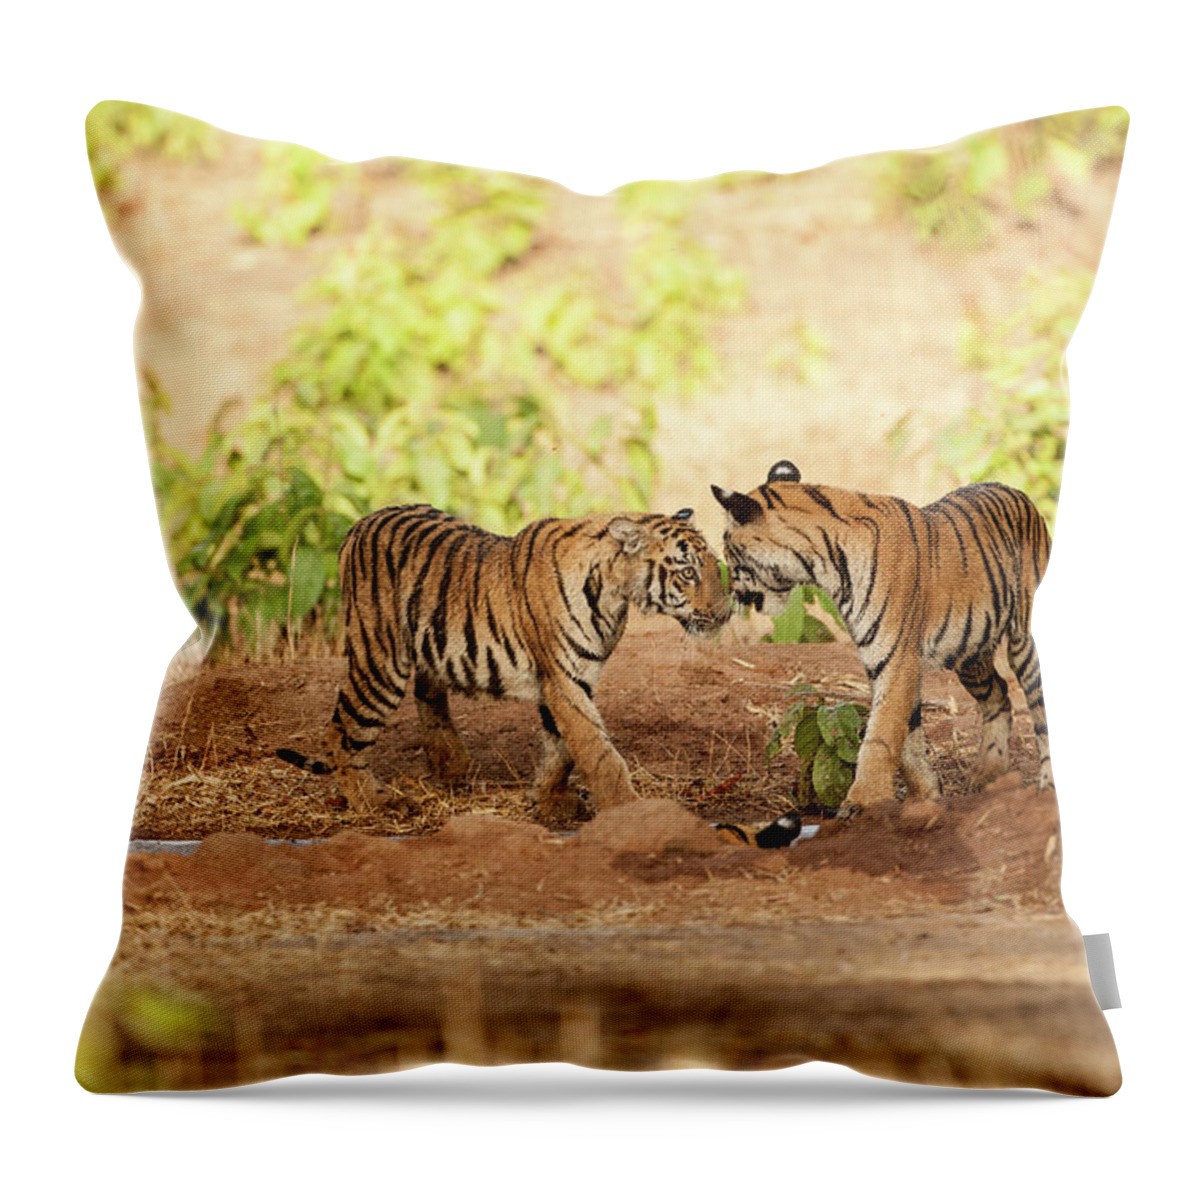 Grass Throw Pillow featuring the photograph Tiger Cubs, Tadoba by Ab Apana